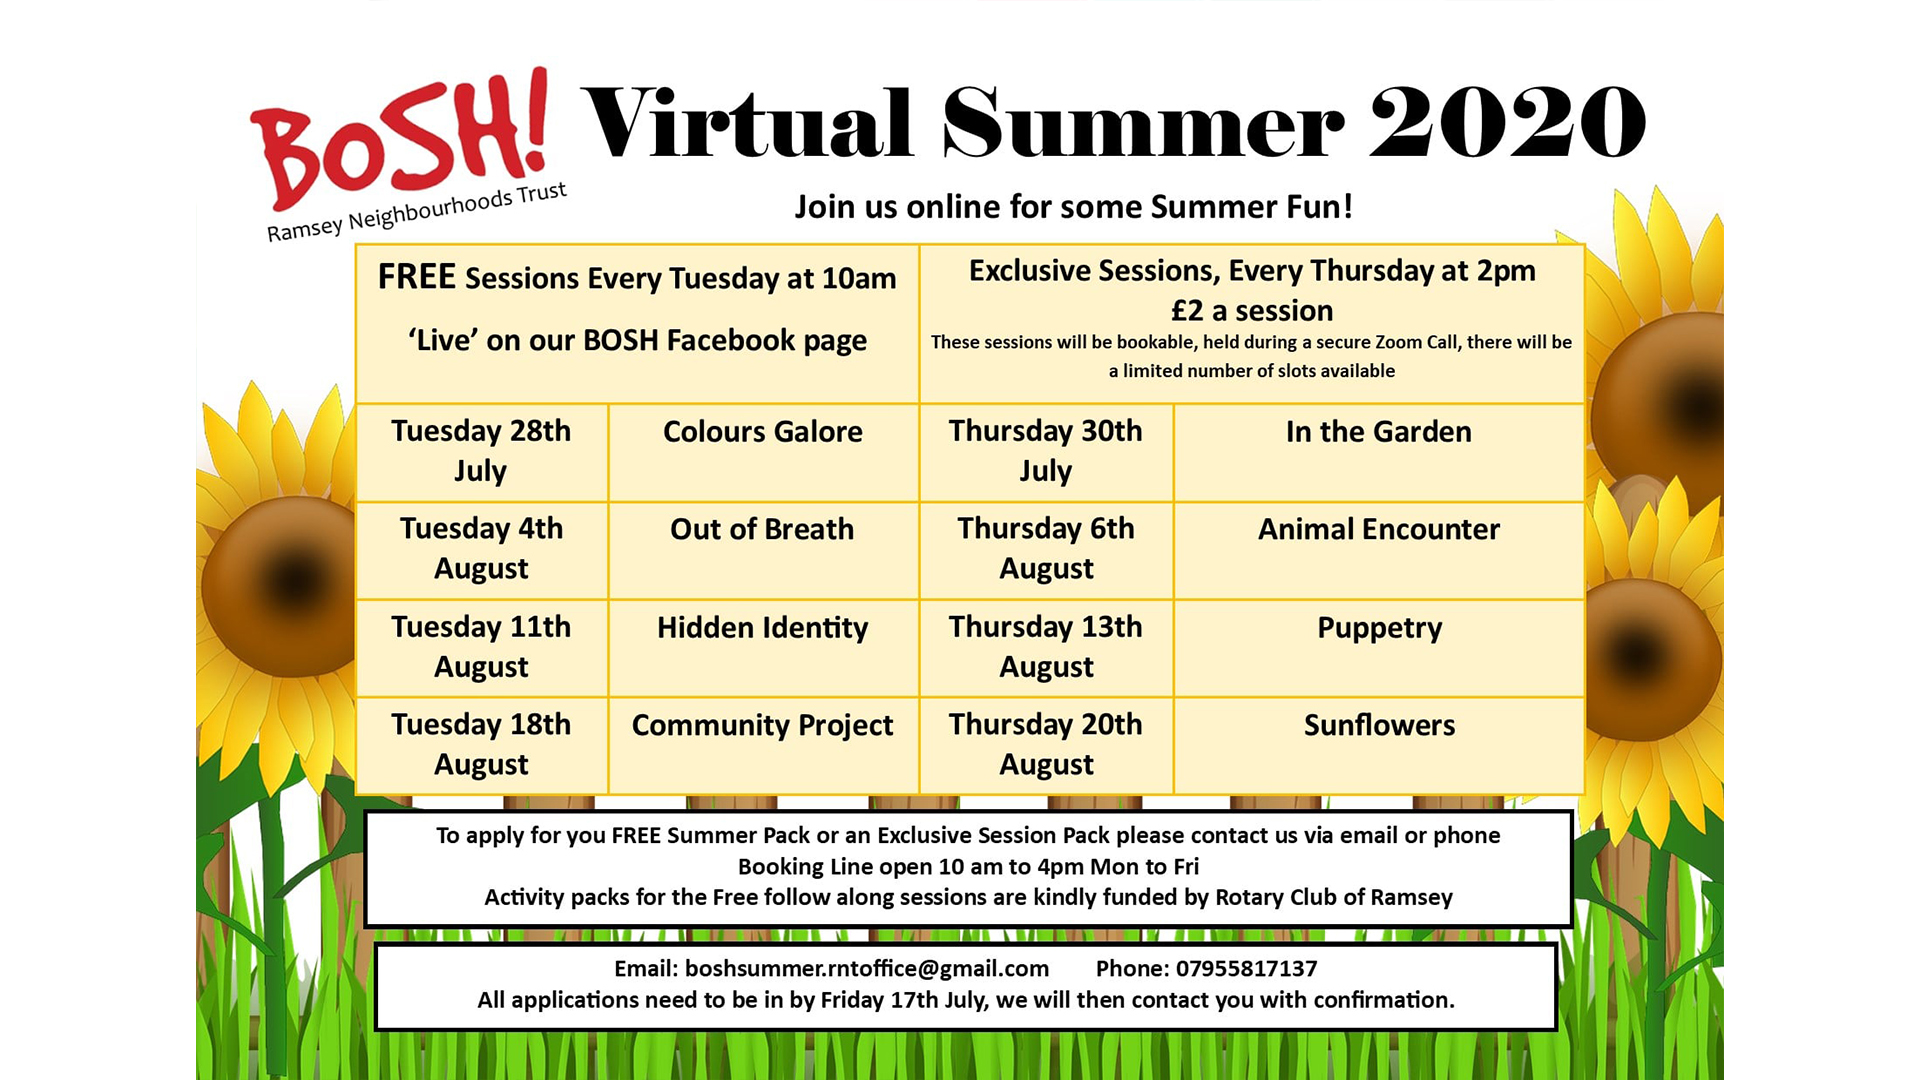 Virtual Summer